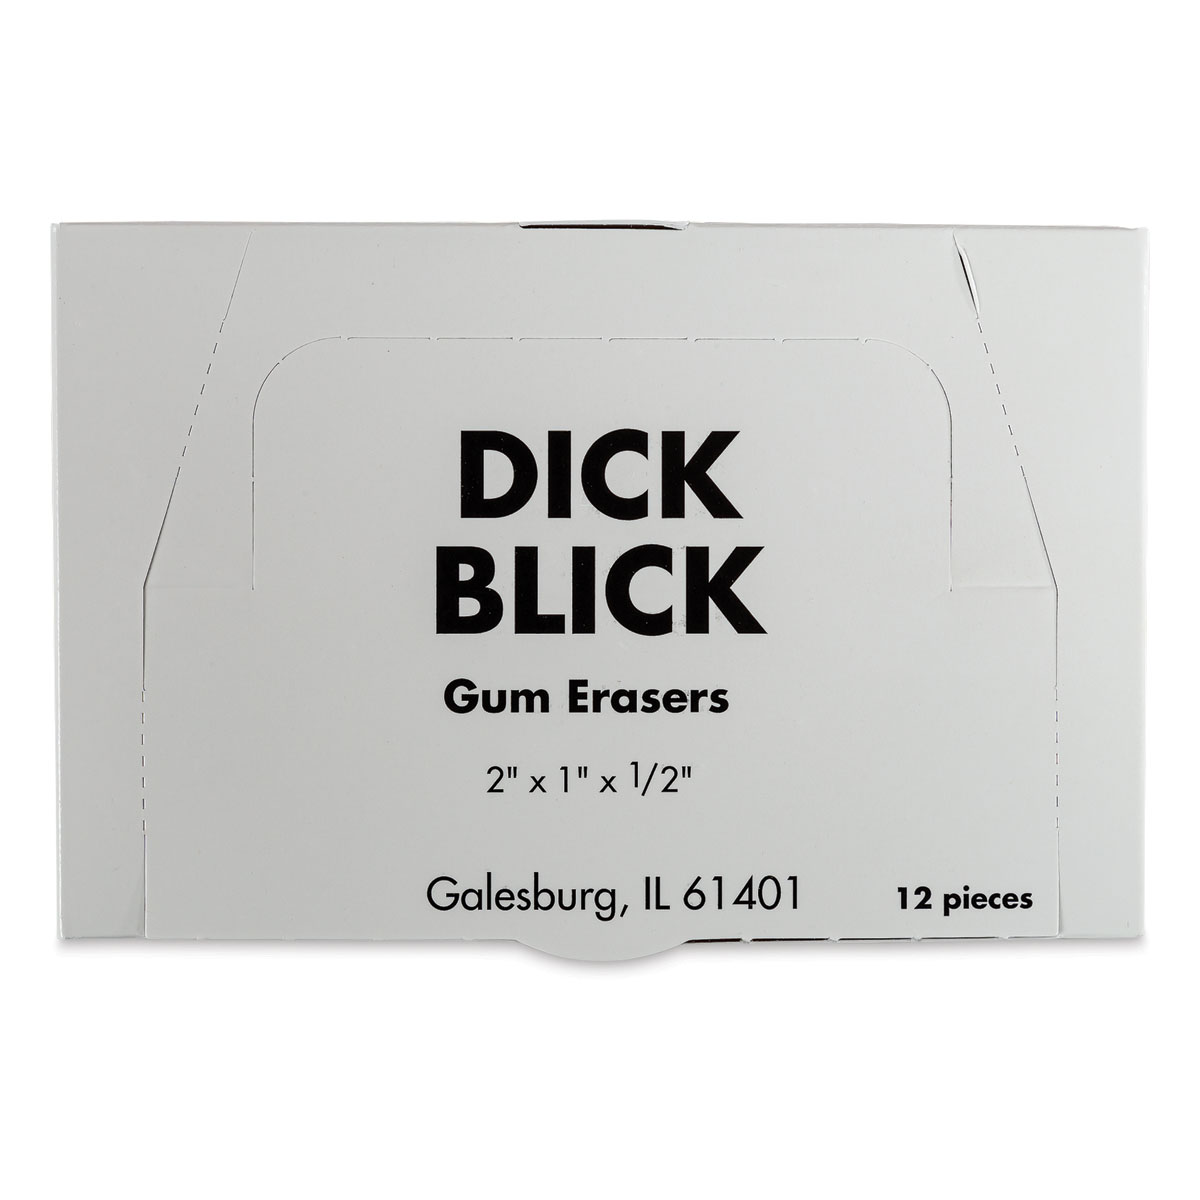 Sax Art Gum Block Erasers, 1 x 1 x 1/2 Inches, Pack of 24 